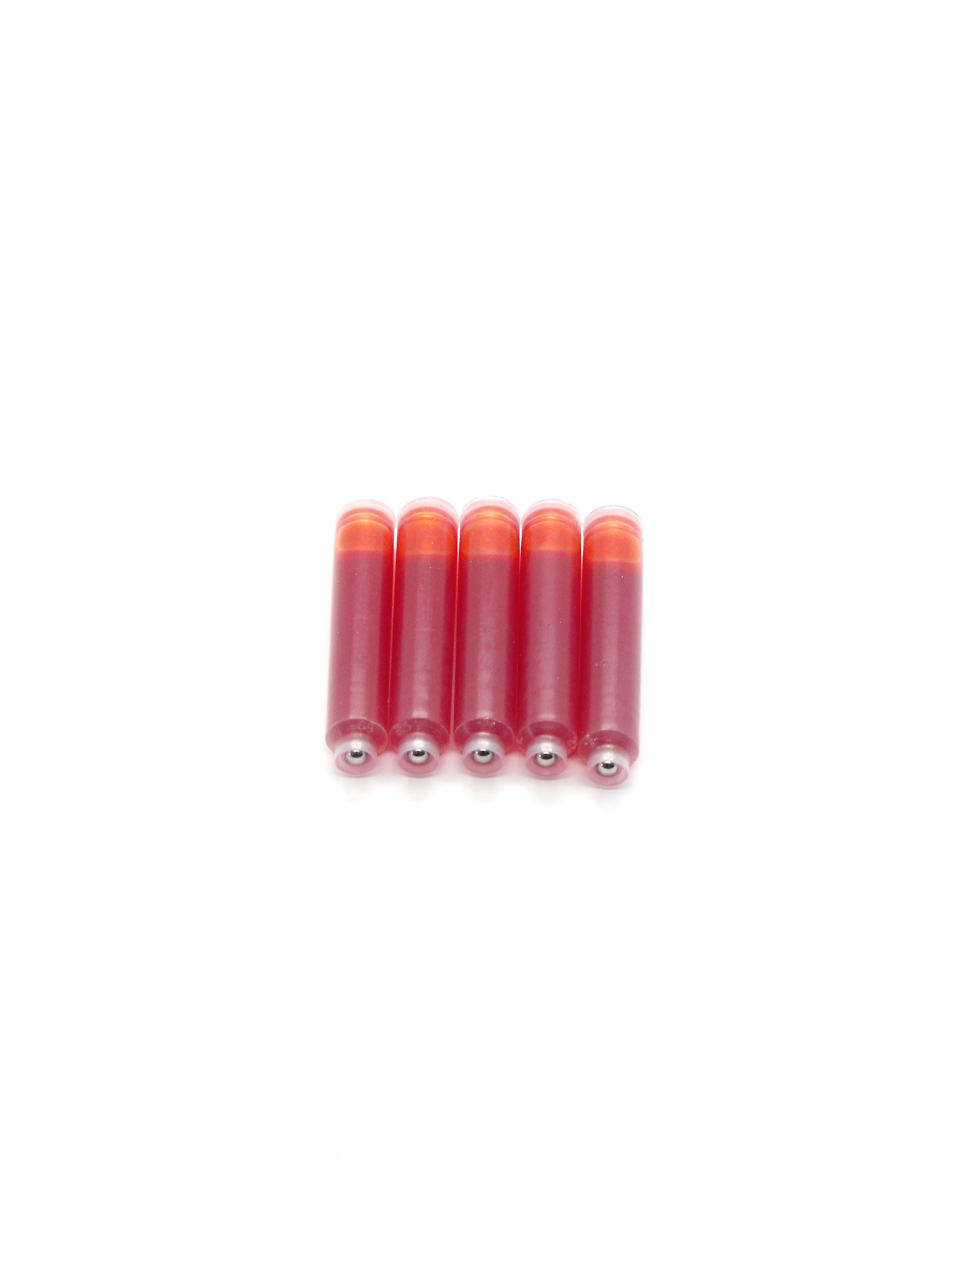 Top Ink Cartridges For Marlen Fountain Pens (Orange)